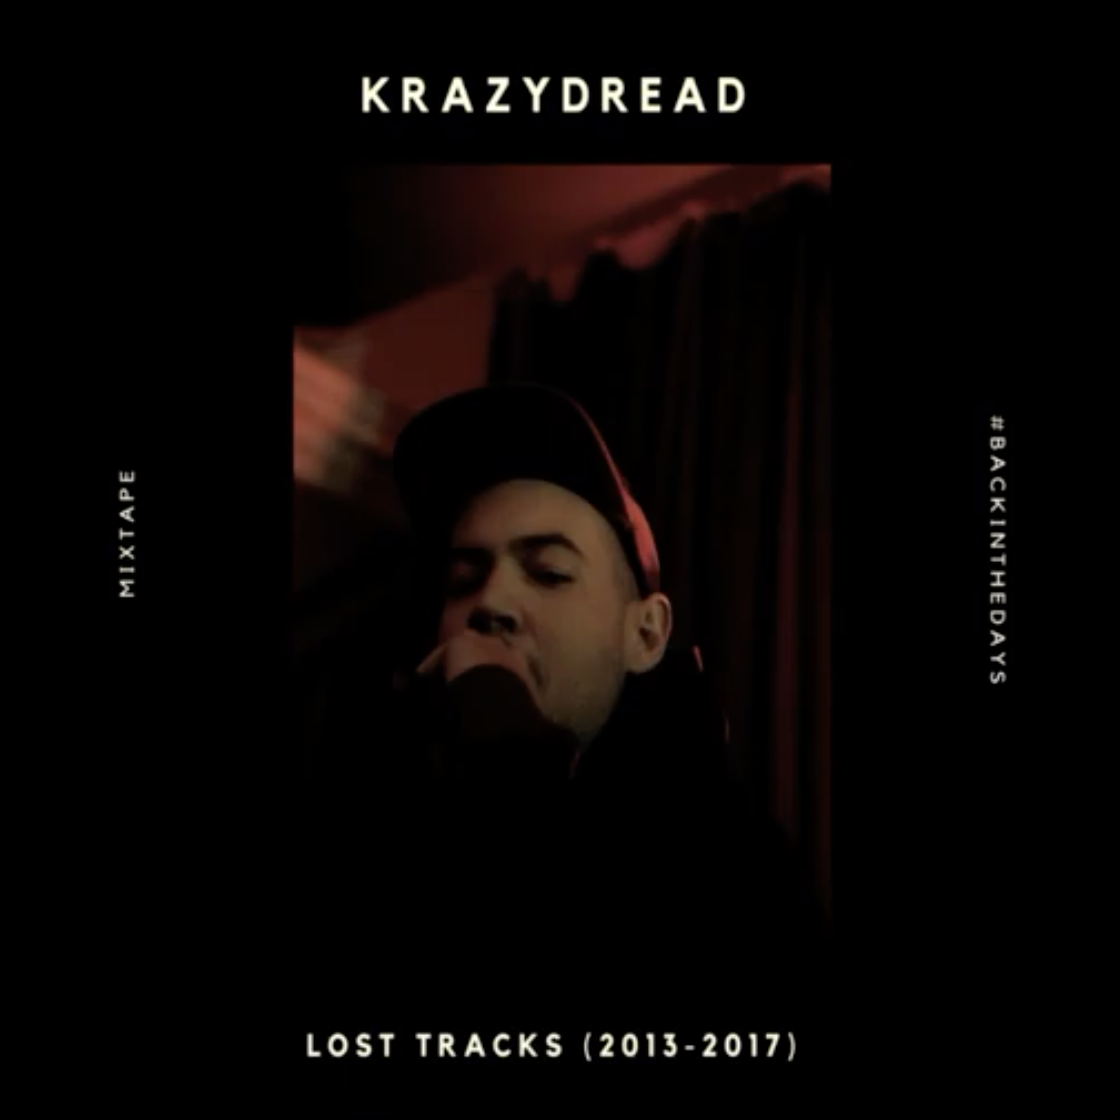 6 - KrazyDread - mixtape Faixas Perdidas (2013-2017)